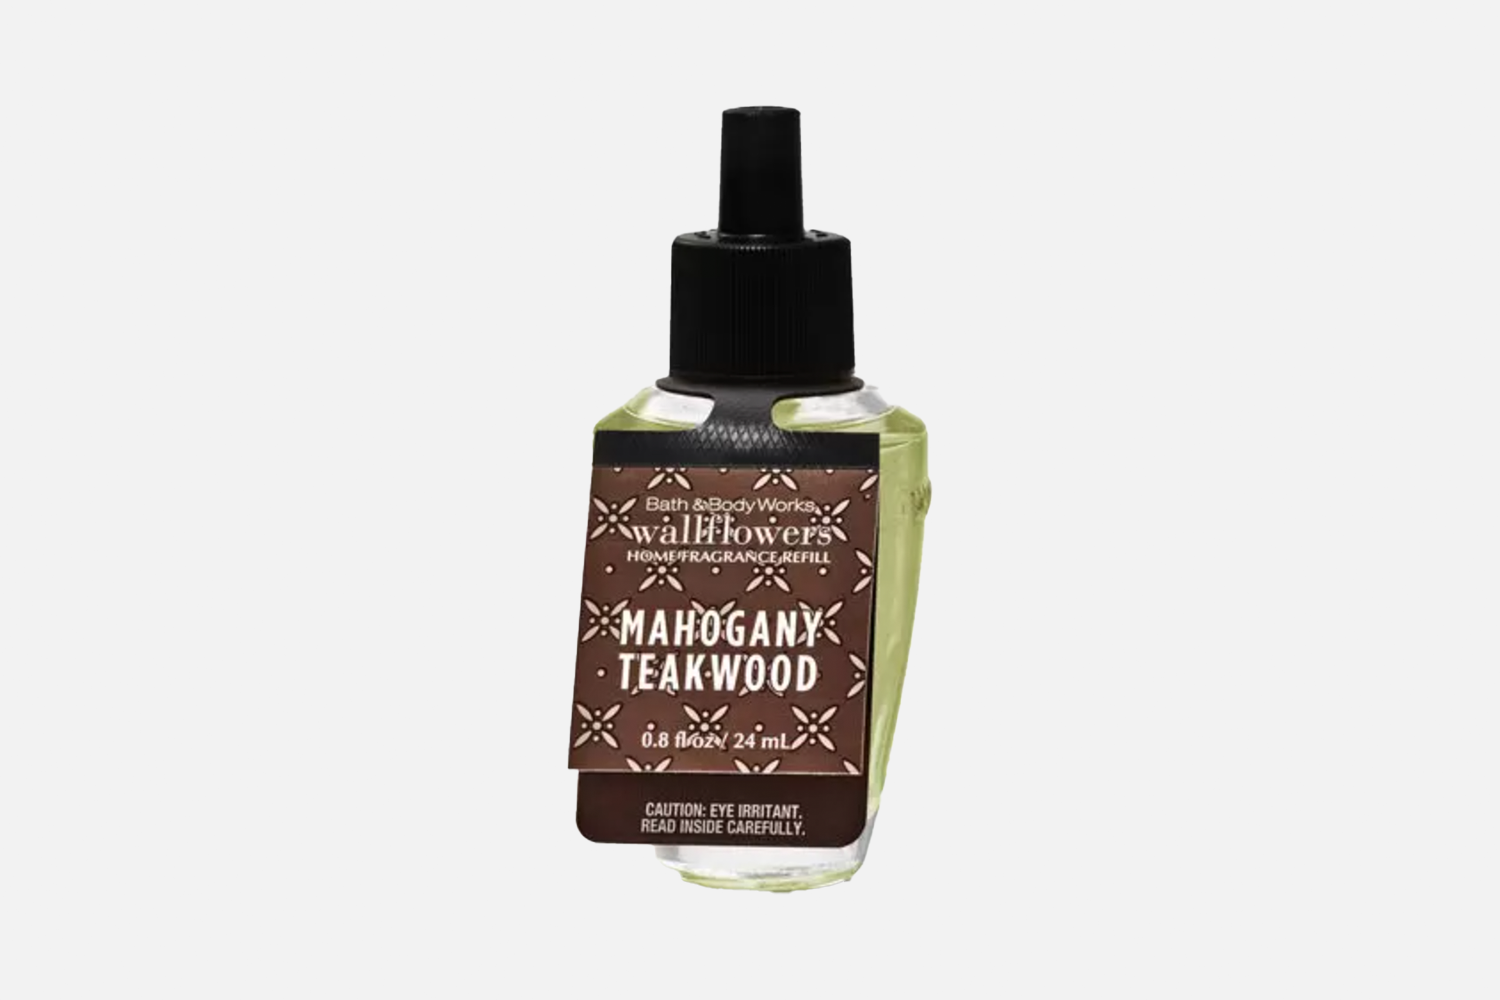 Mahogany Teakwood Wallflowers Fragrance